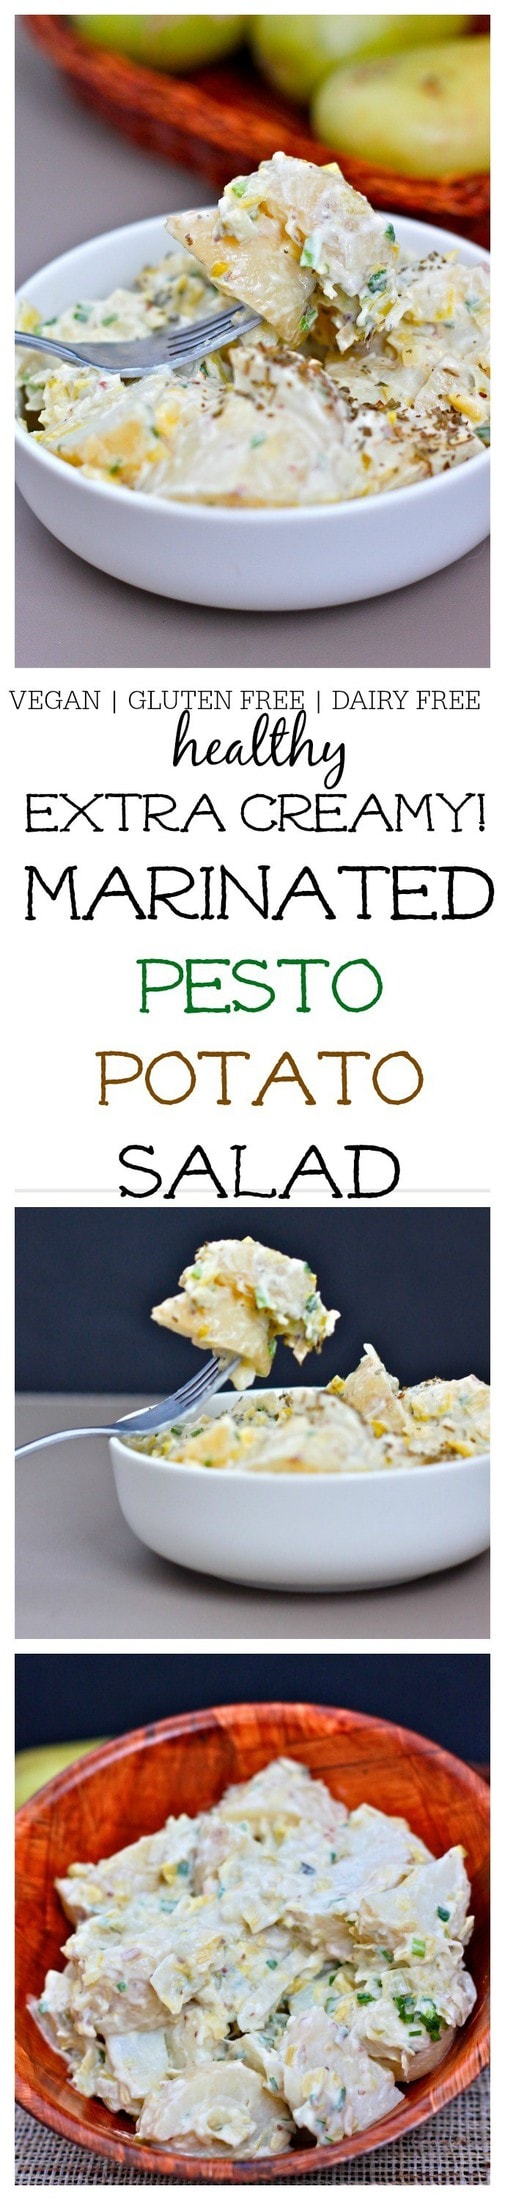 marinated pesto potato salad